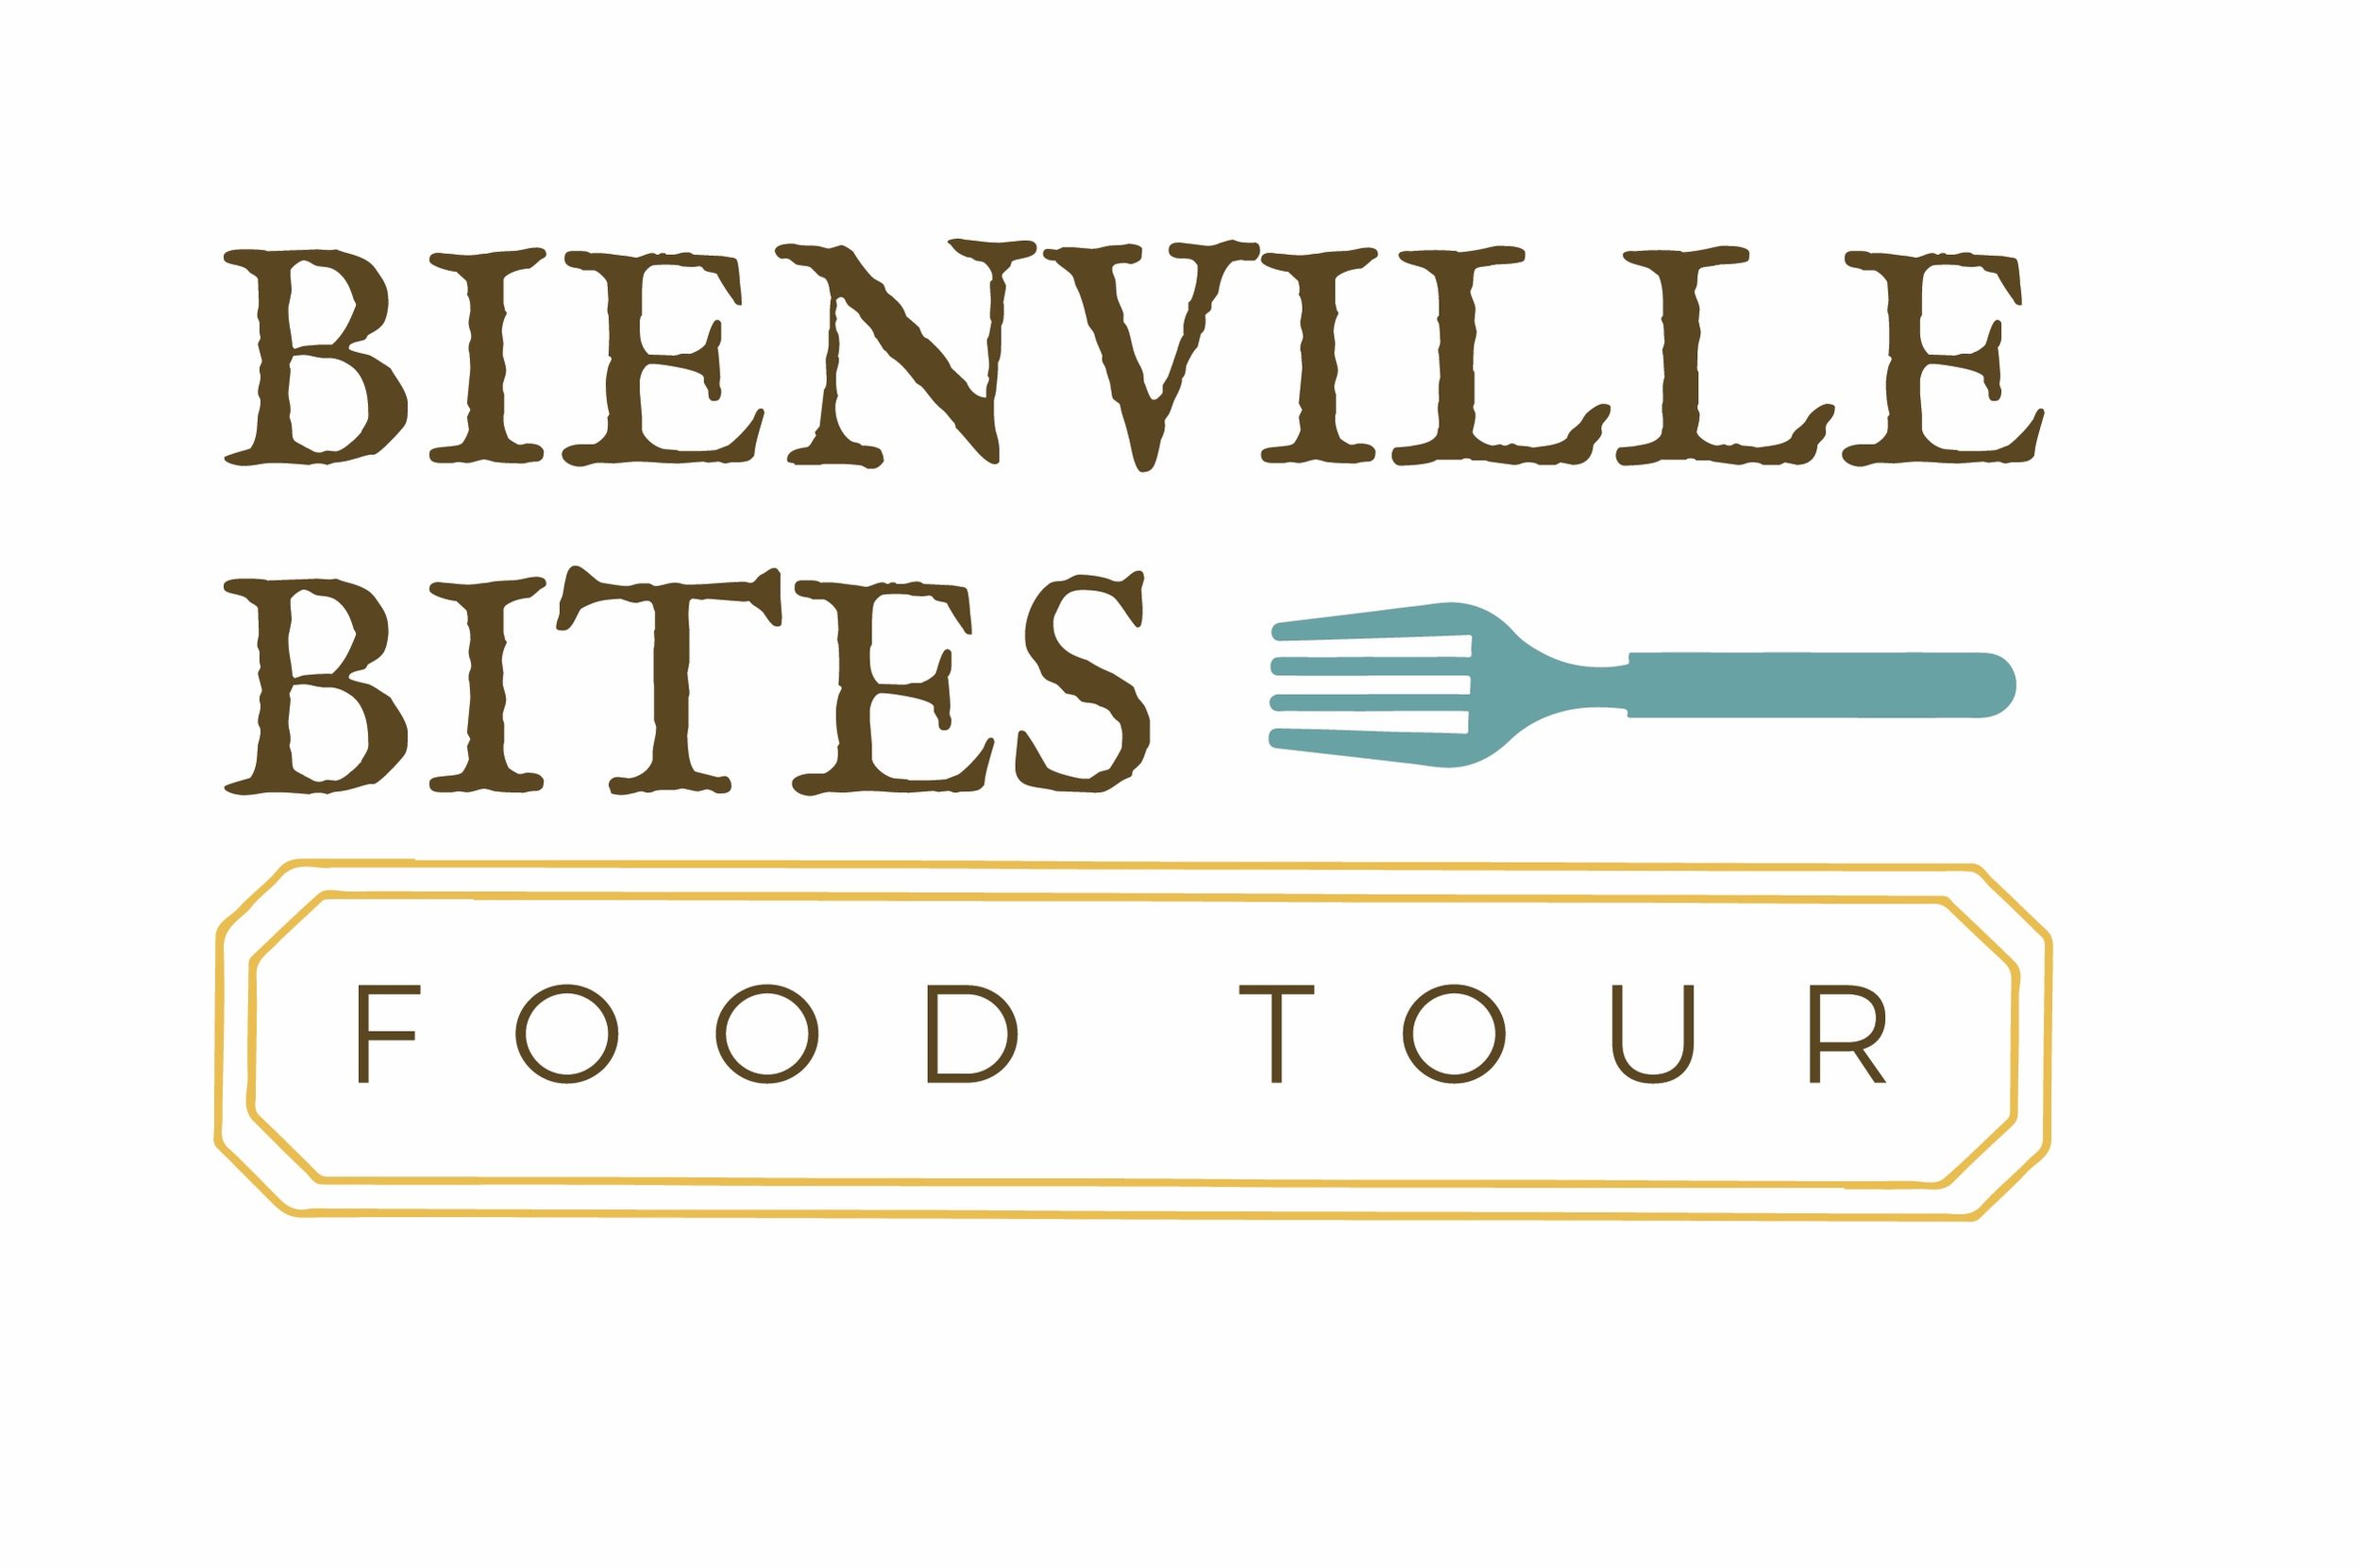 Bienville Bites Logo.jpeg